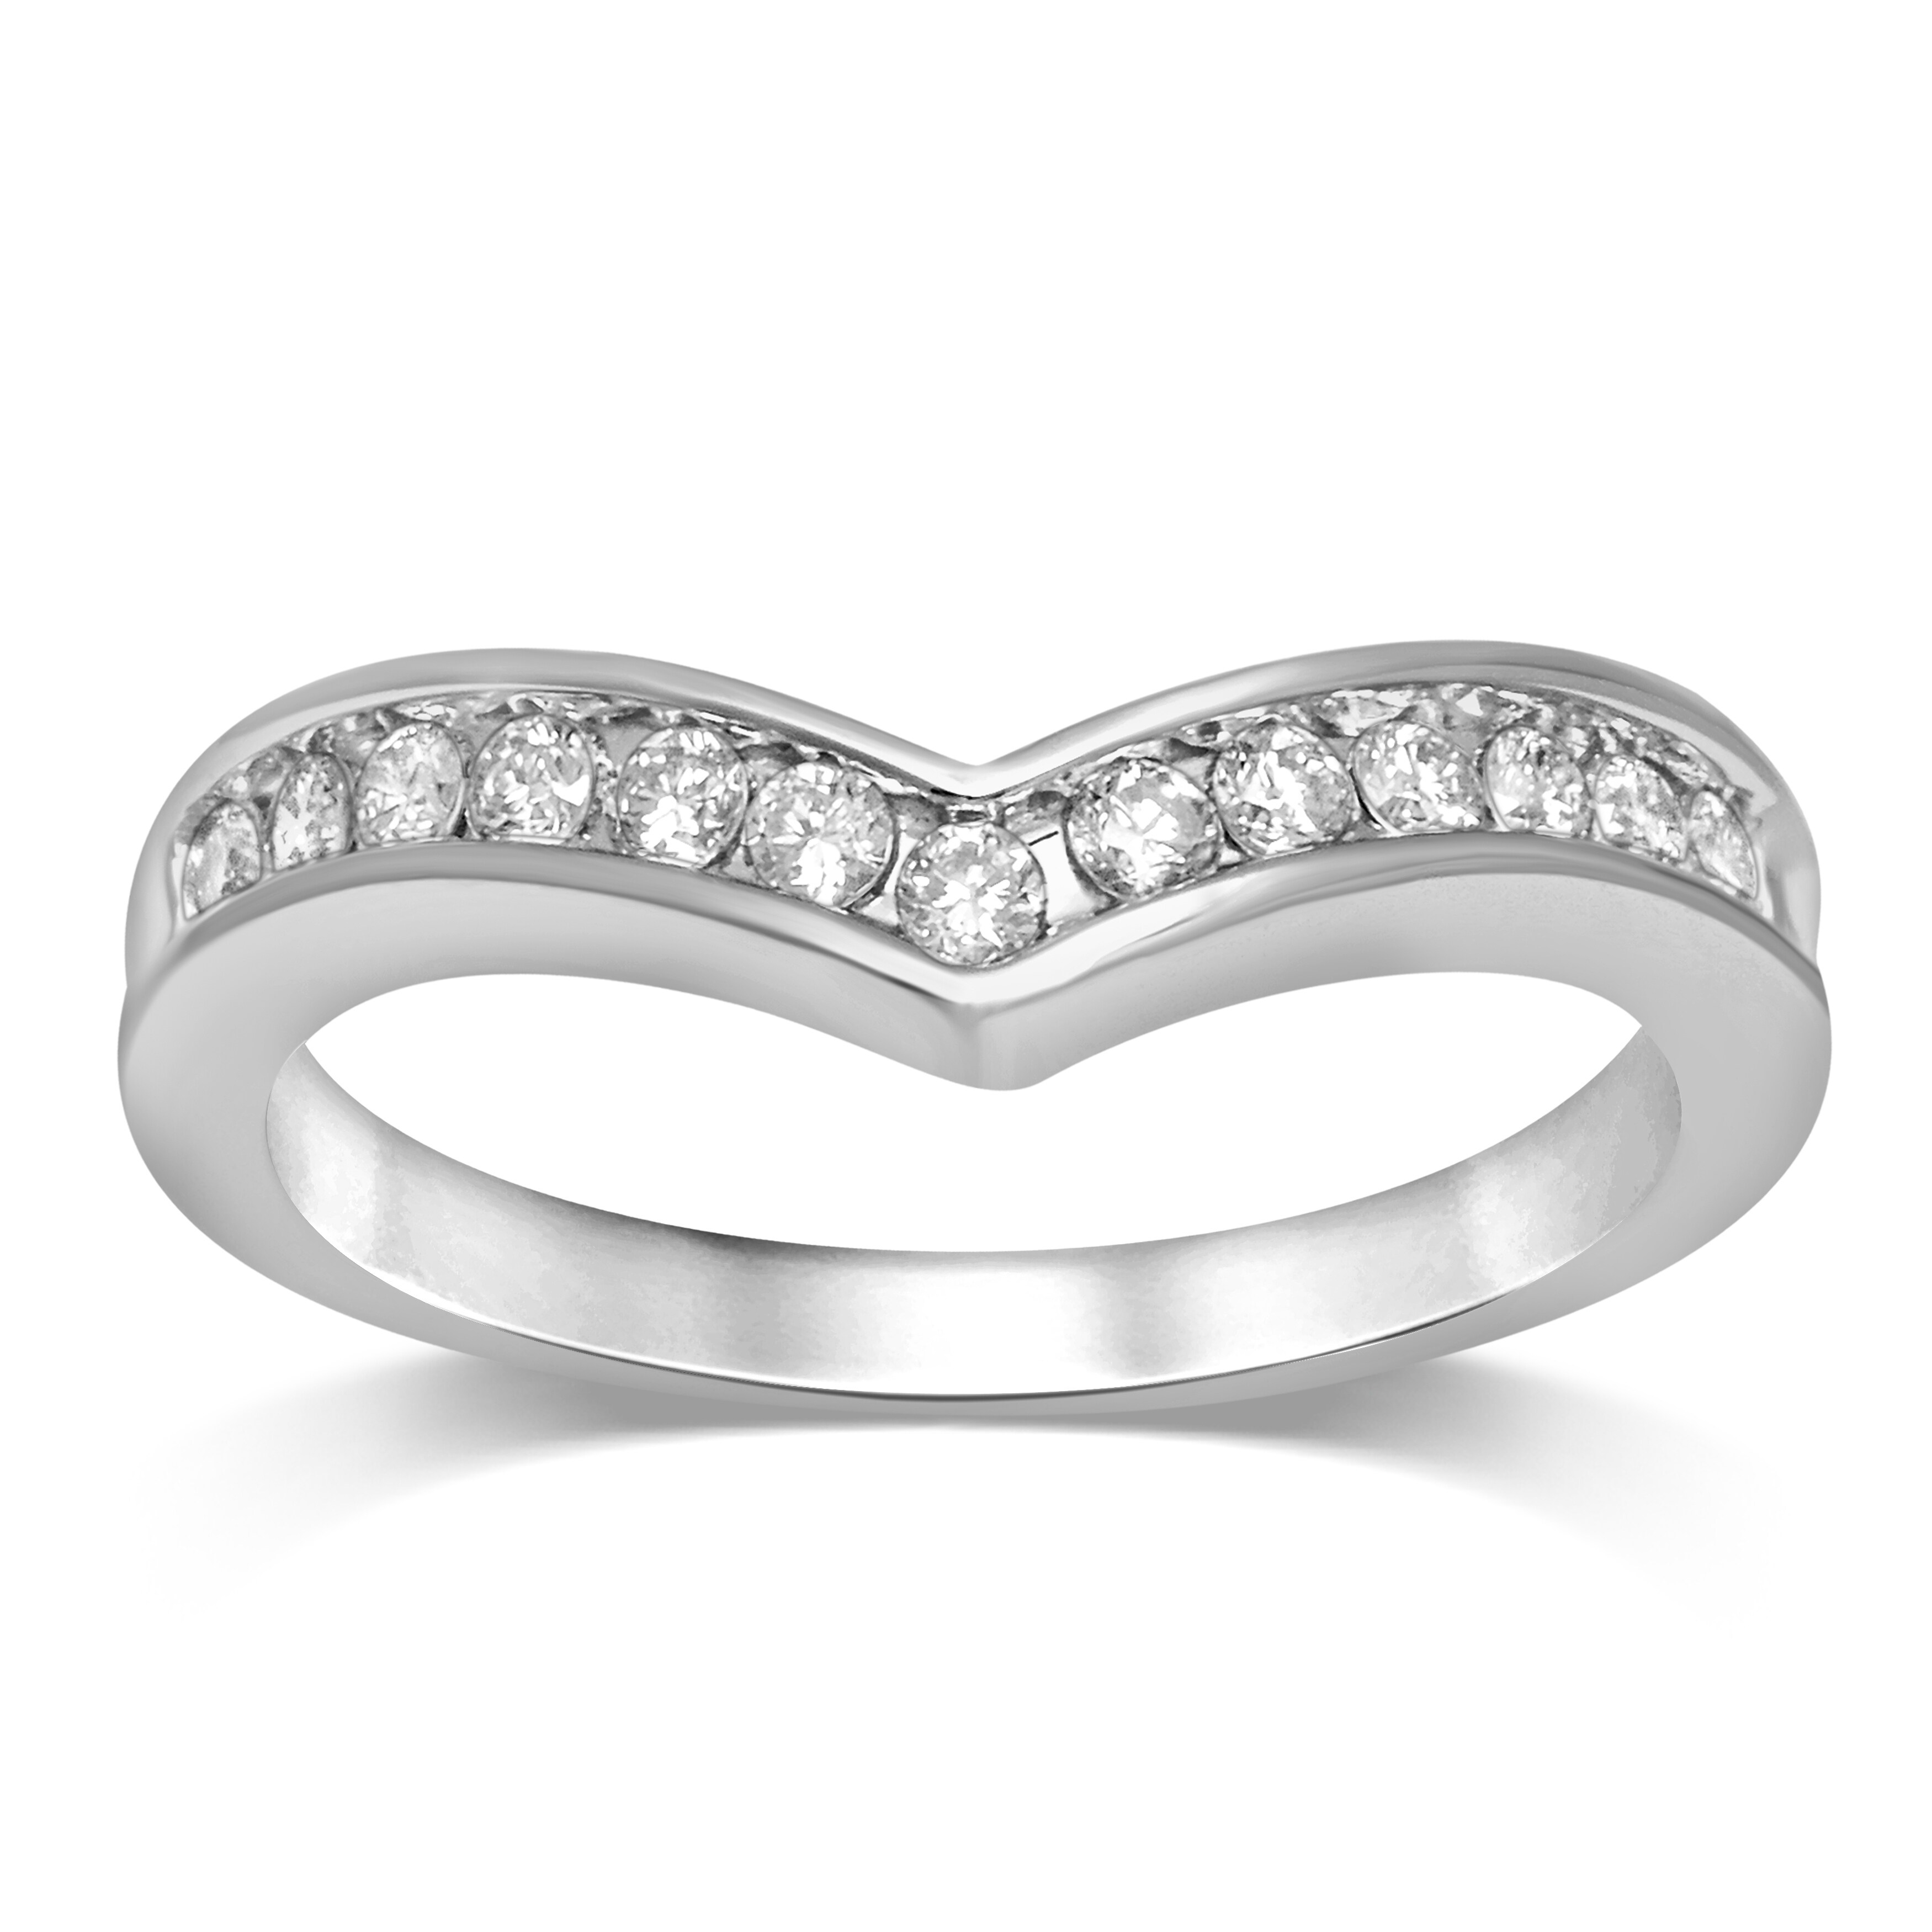 Size 6 10K White Gold Filigree Band Diamond Chevron Ring